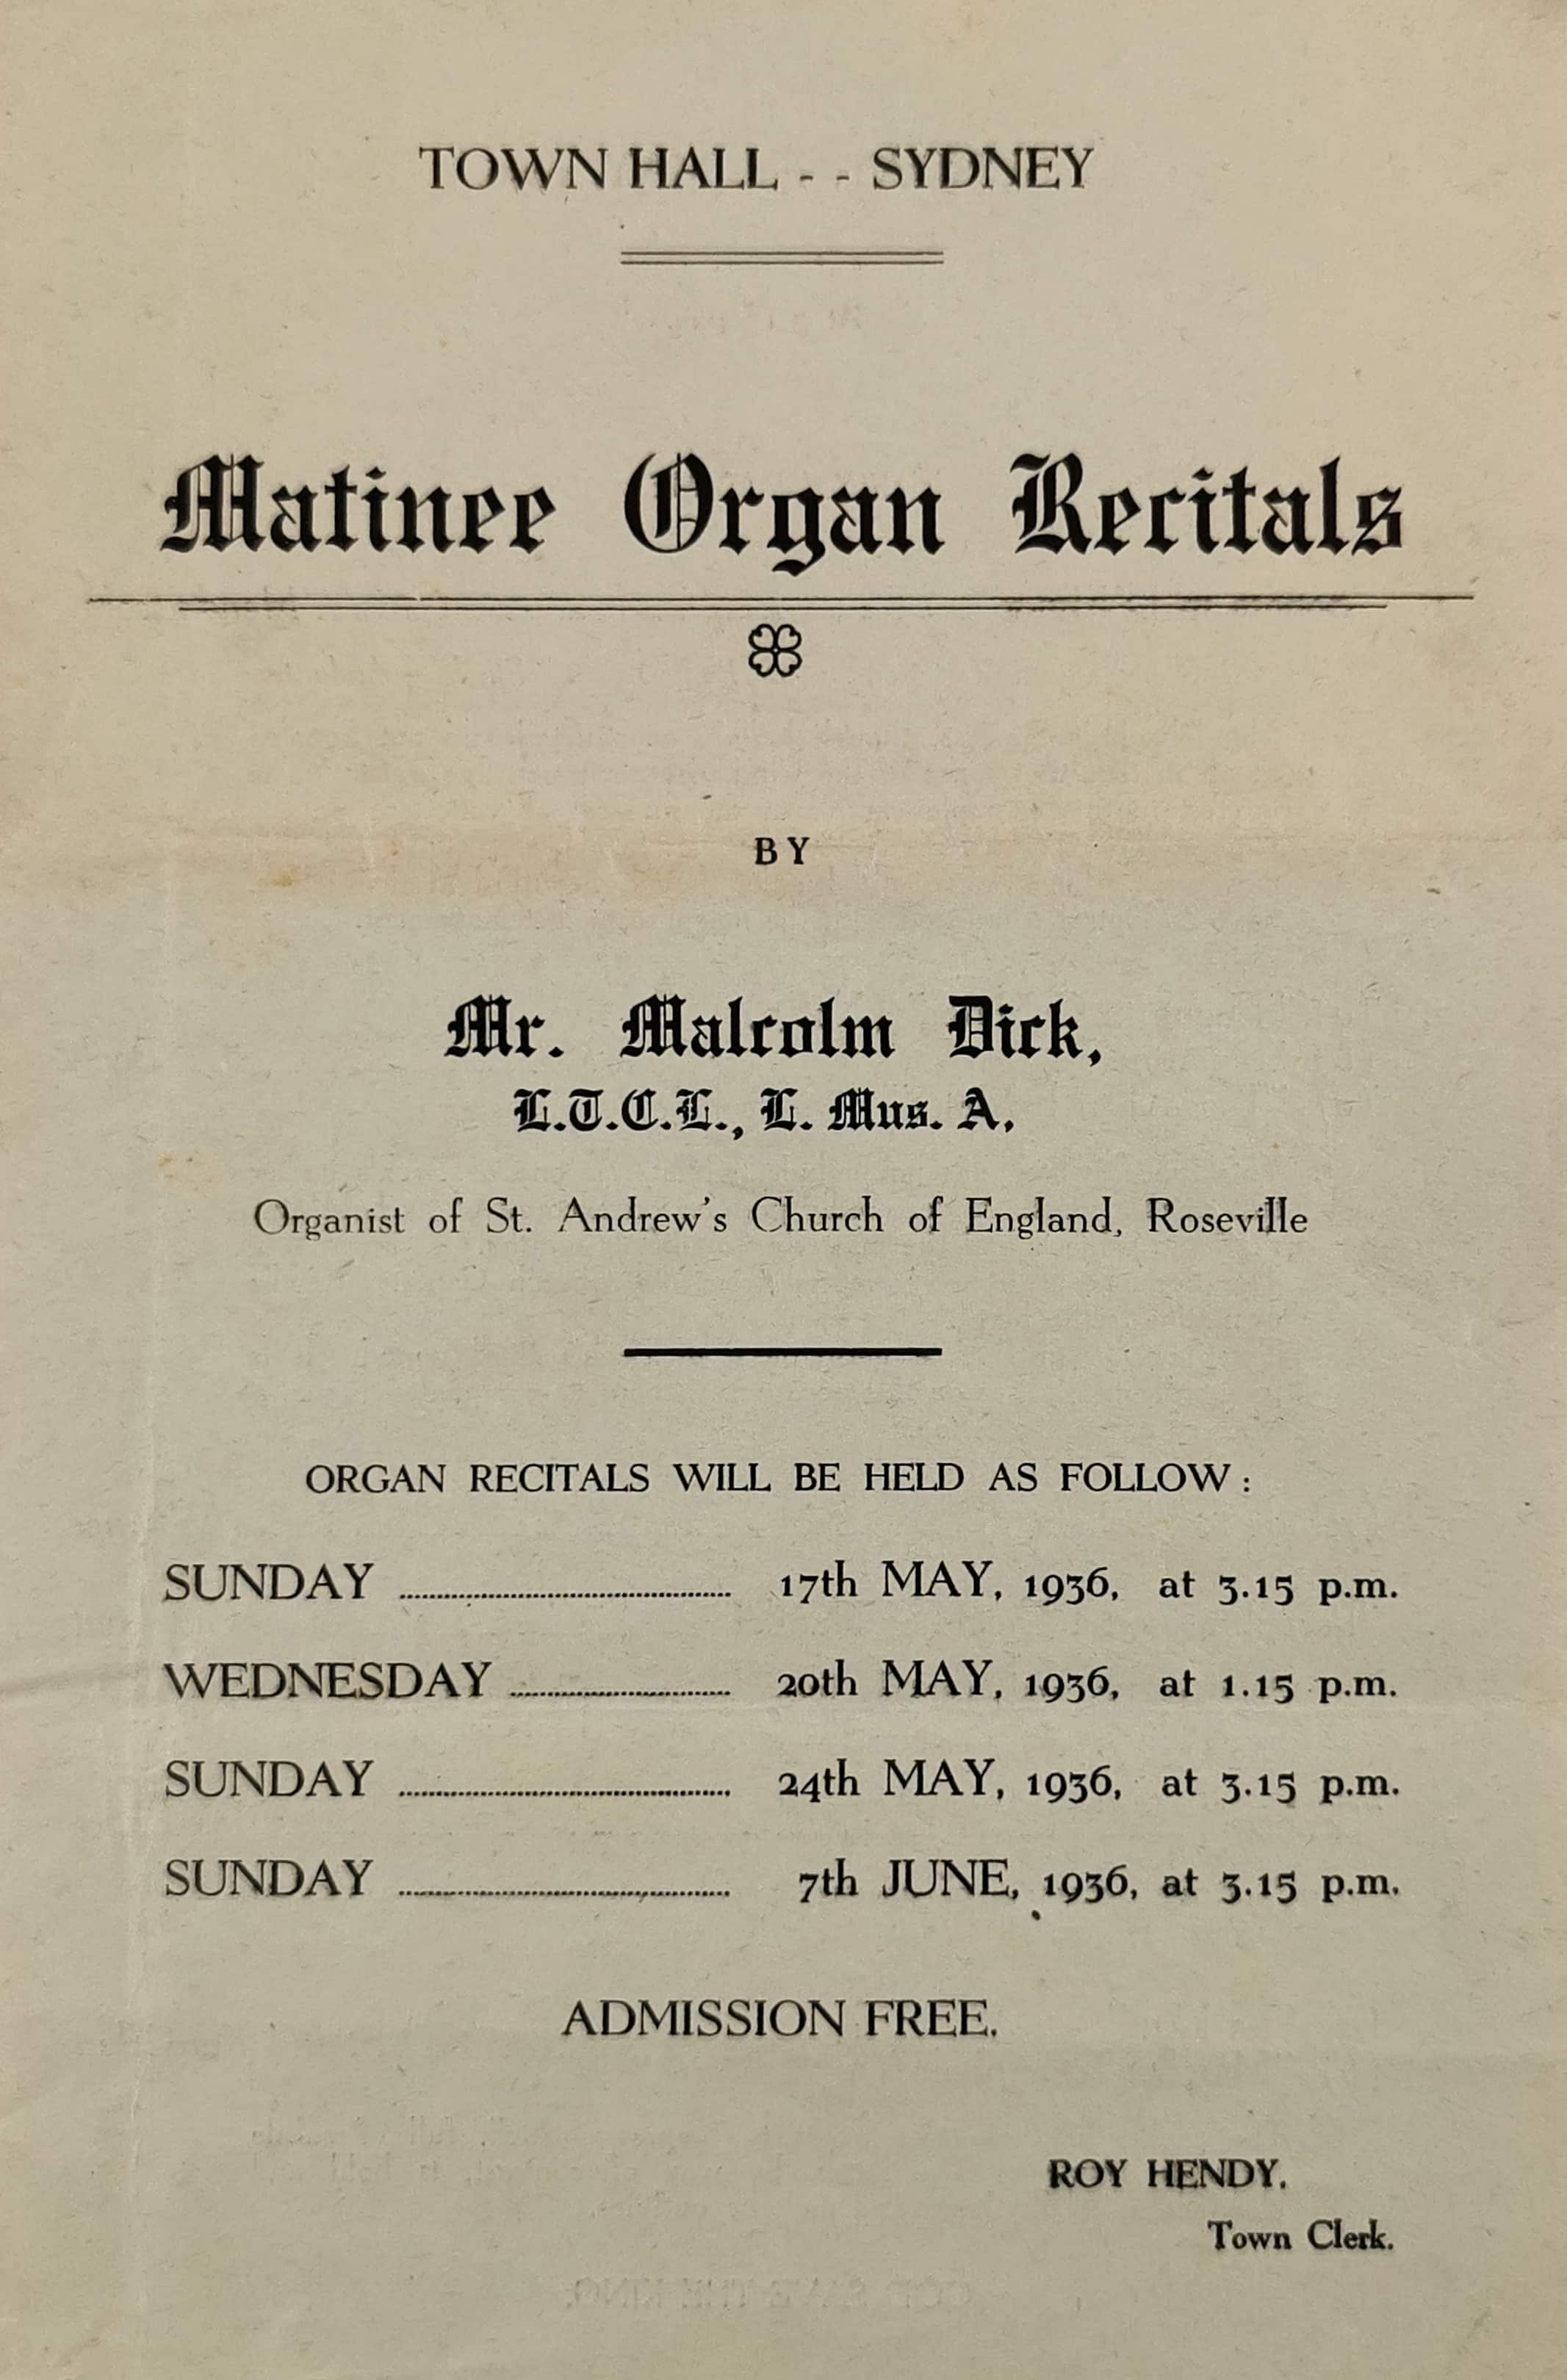 Town Hall Sydney / Matinee Organ Recitals by Malcolm Dick, - Vintage Ephemera from 1936